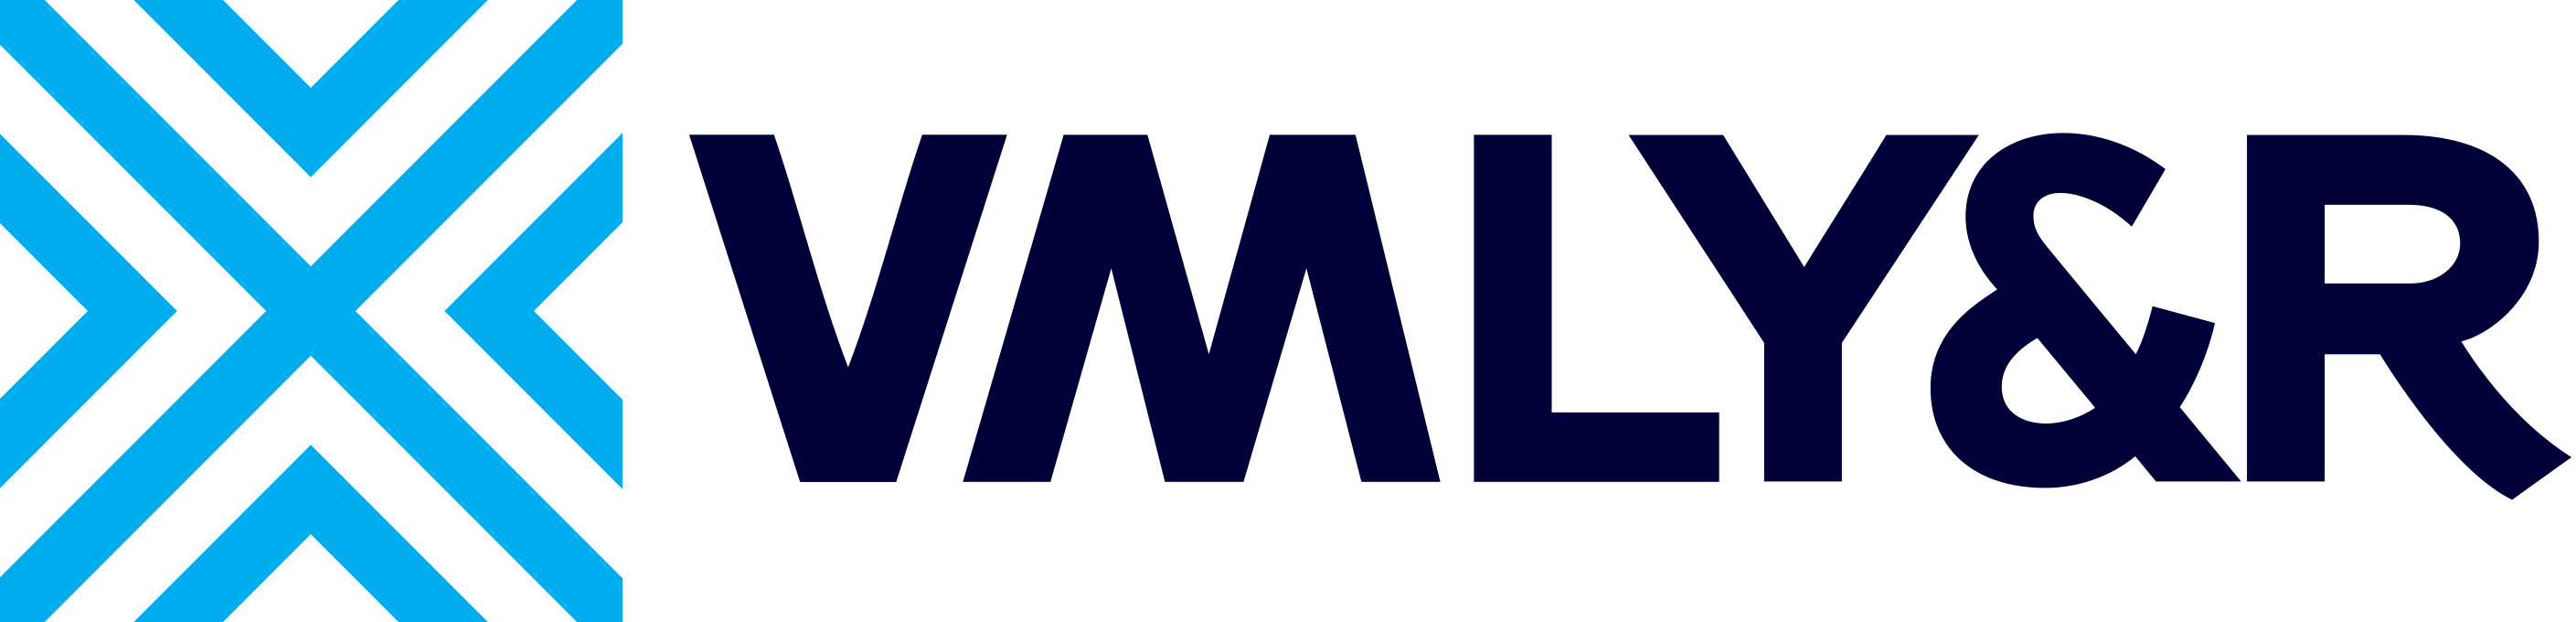 Vmly&r Poland Logo - Vmly&r Logo Clipart (2818x680), Png Download